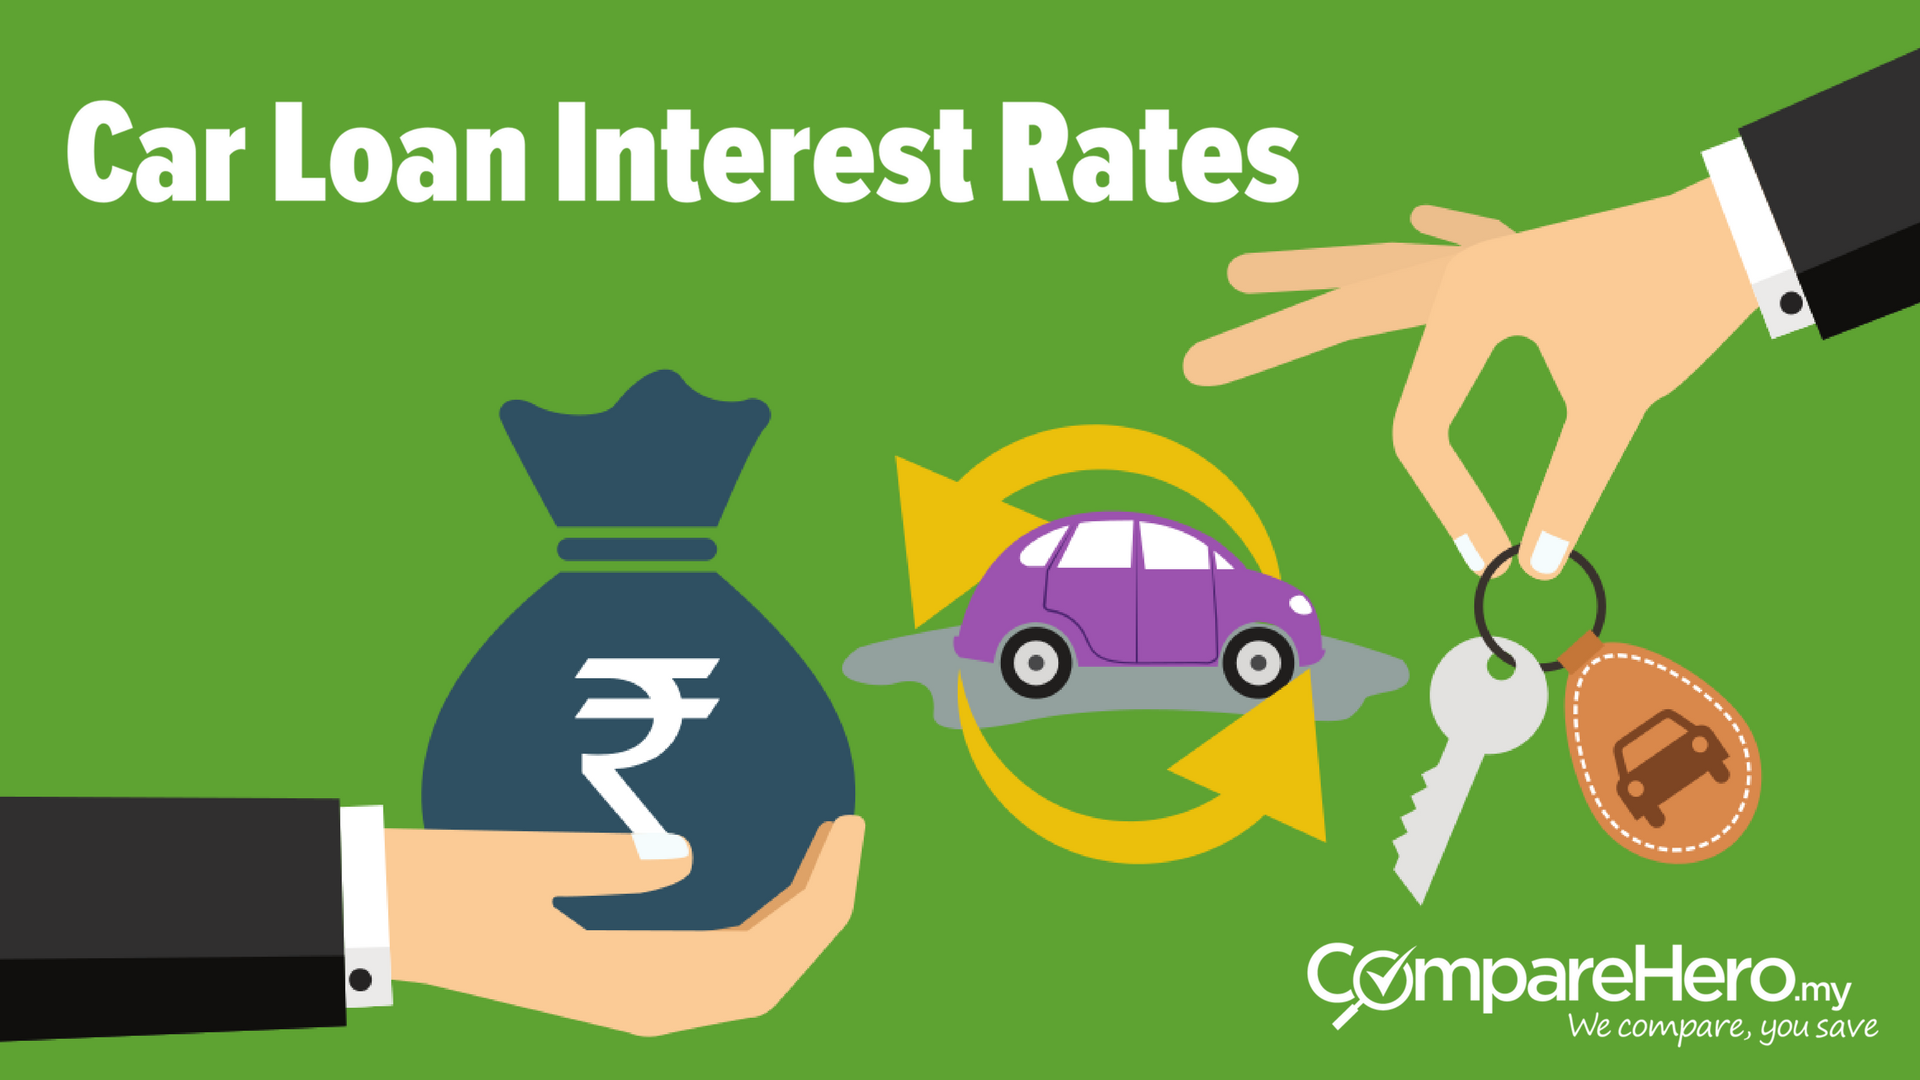 Car loan interest rates